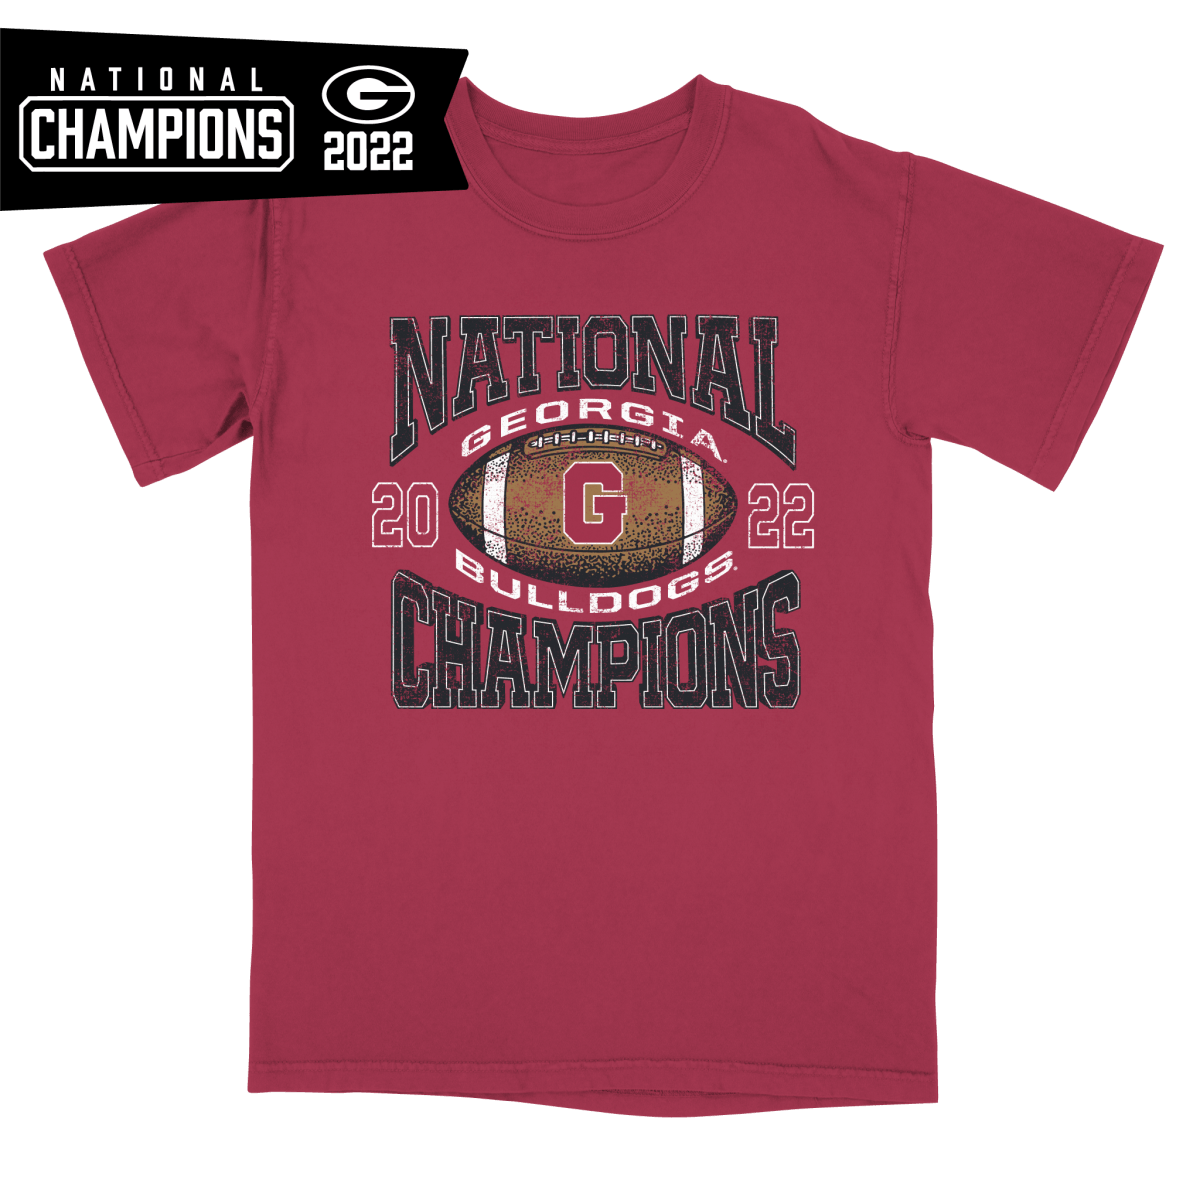 University of Georgia T-Shirts, Georgia Bulldogs Tees, T-Shirt